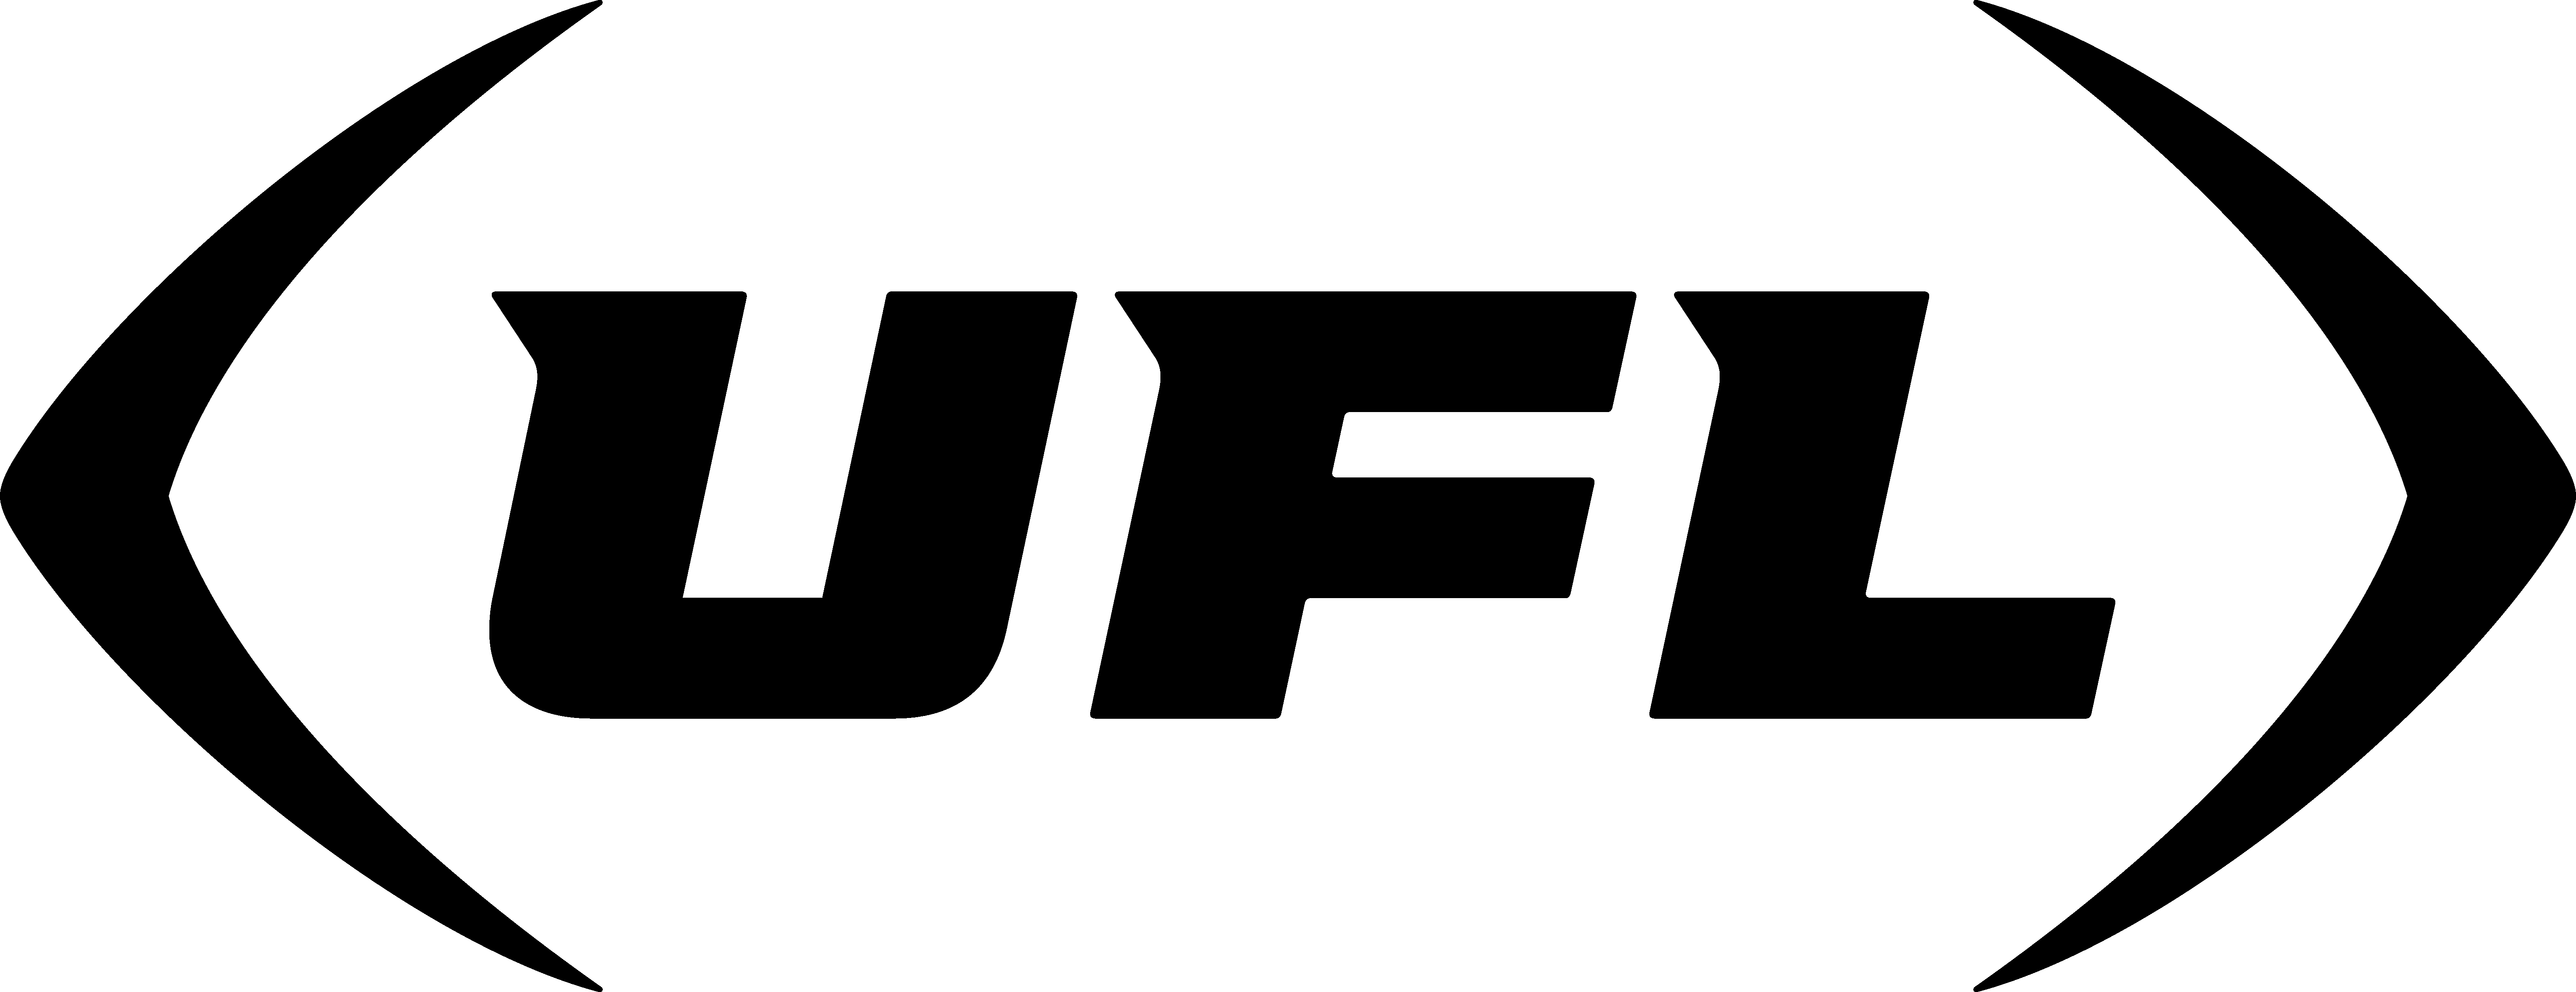 UFL Football League logo